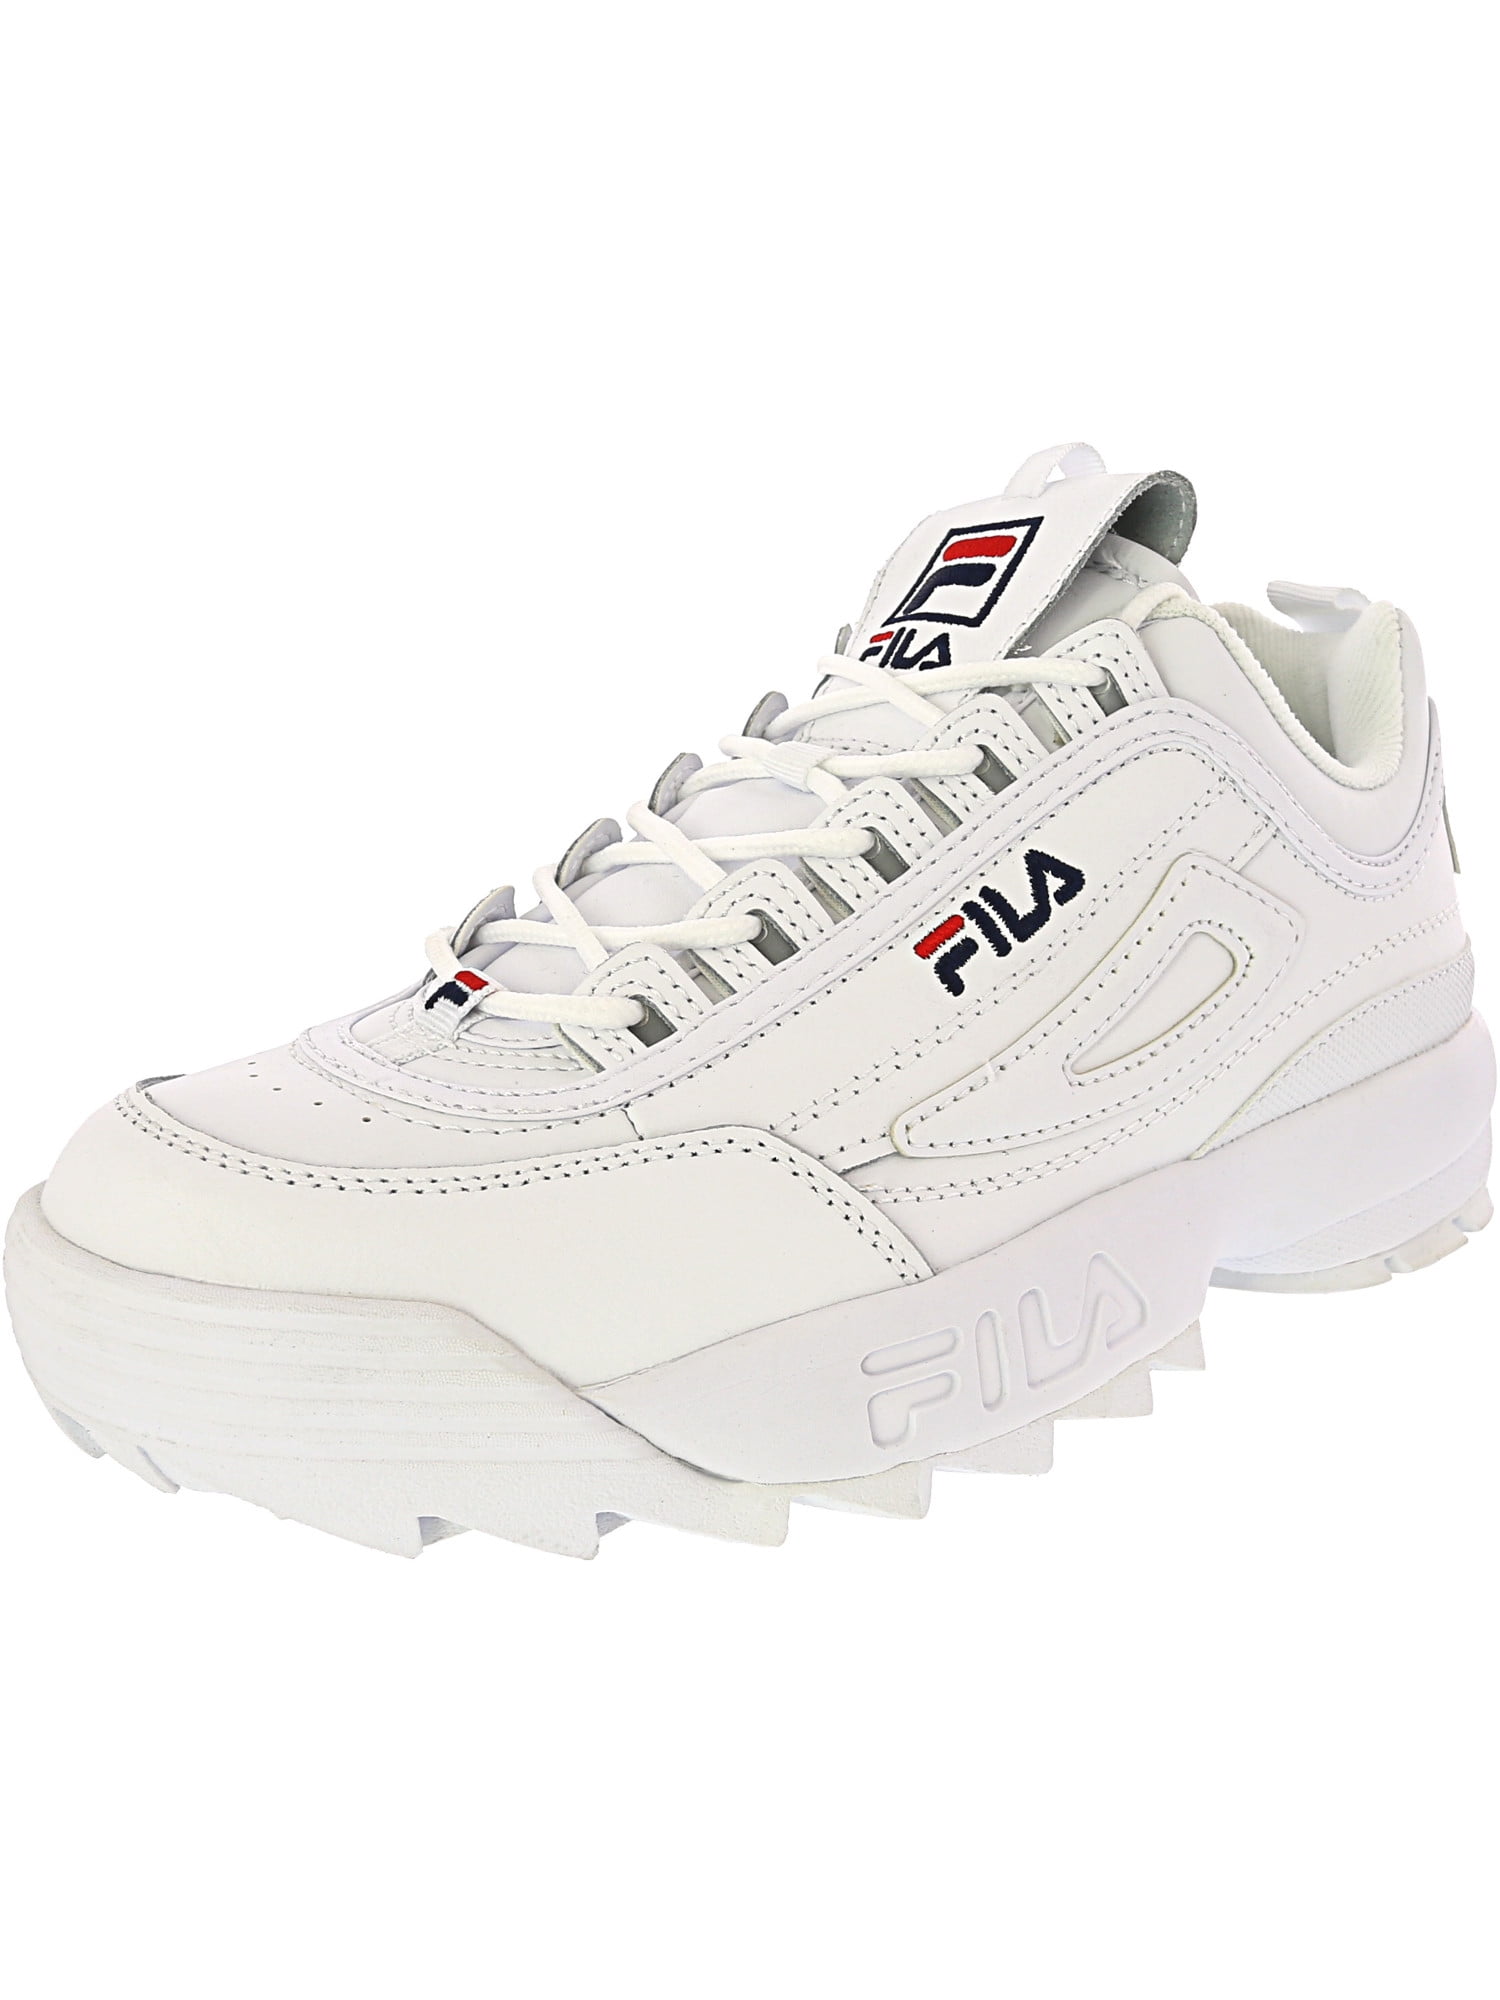 FILA Disruptor 2 Sneaker Boots Black & Beige White